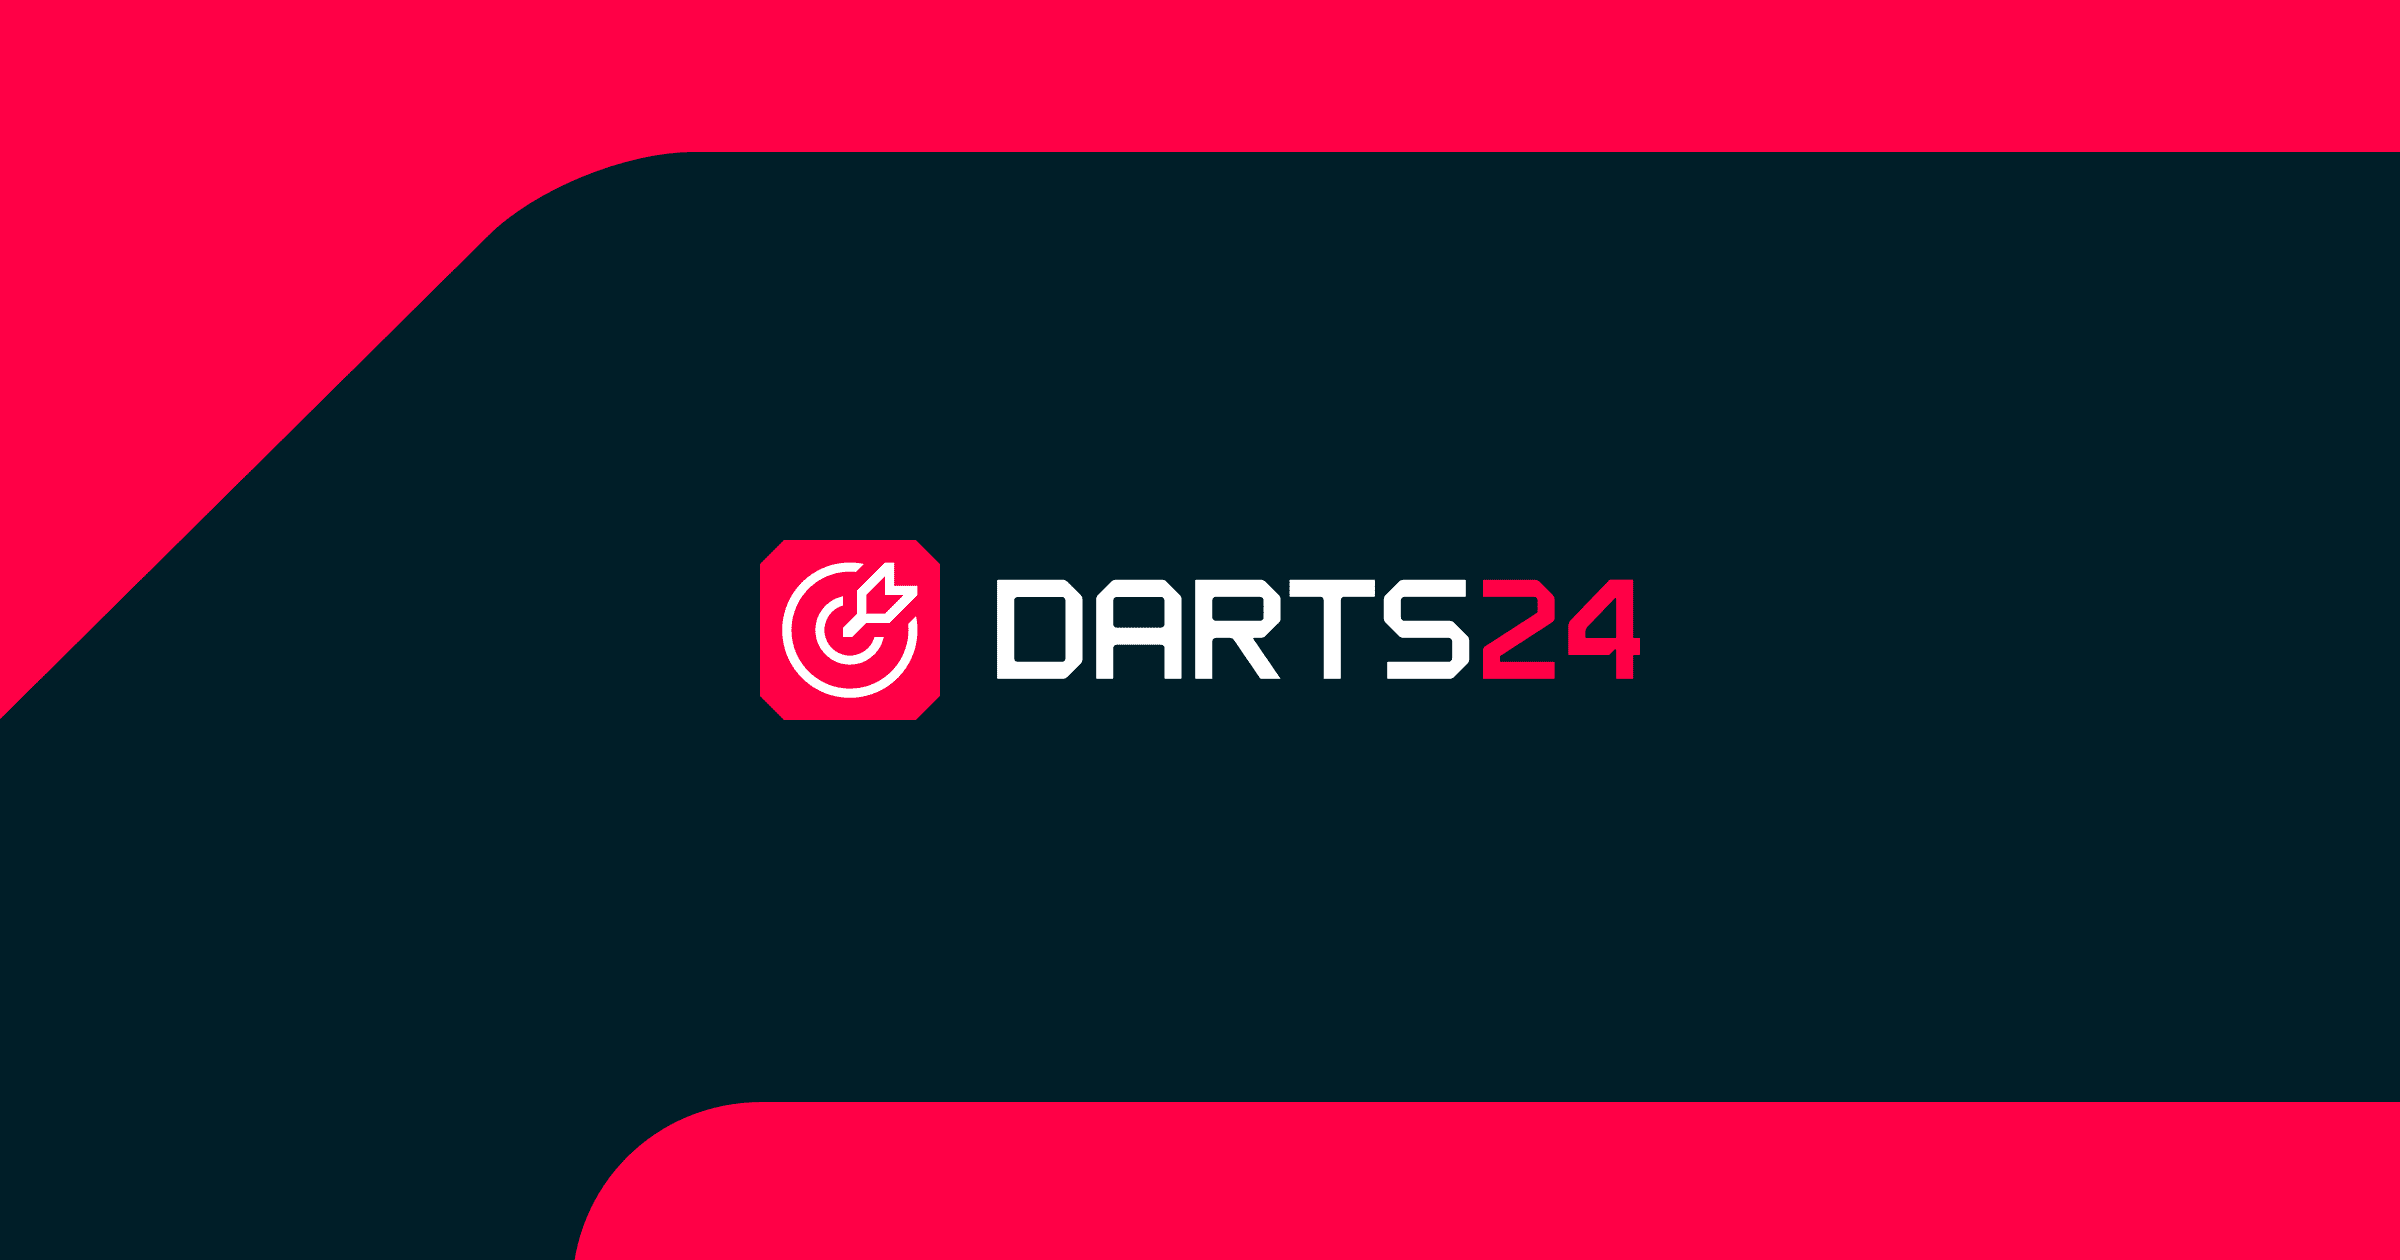 Darts24 Live Darts Scores, Results